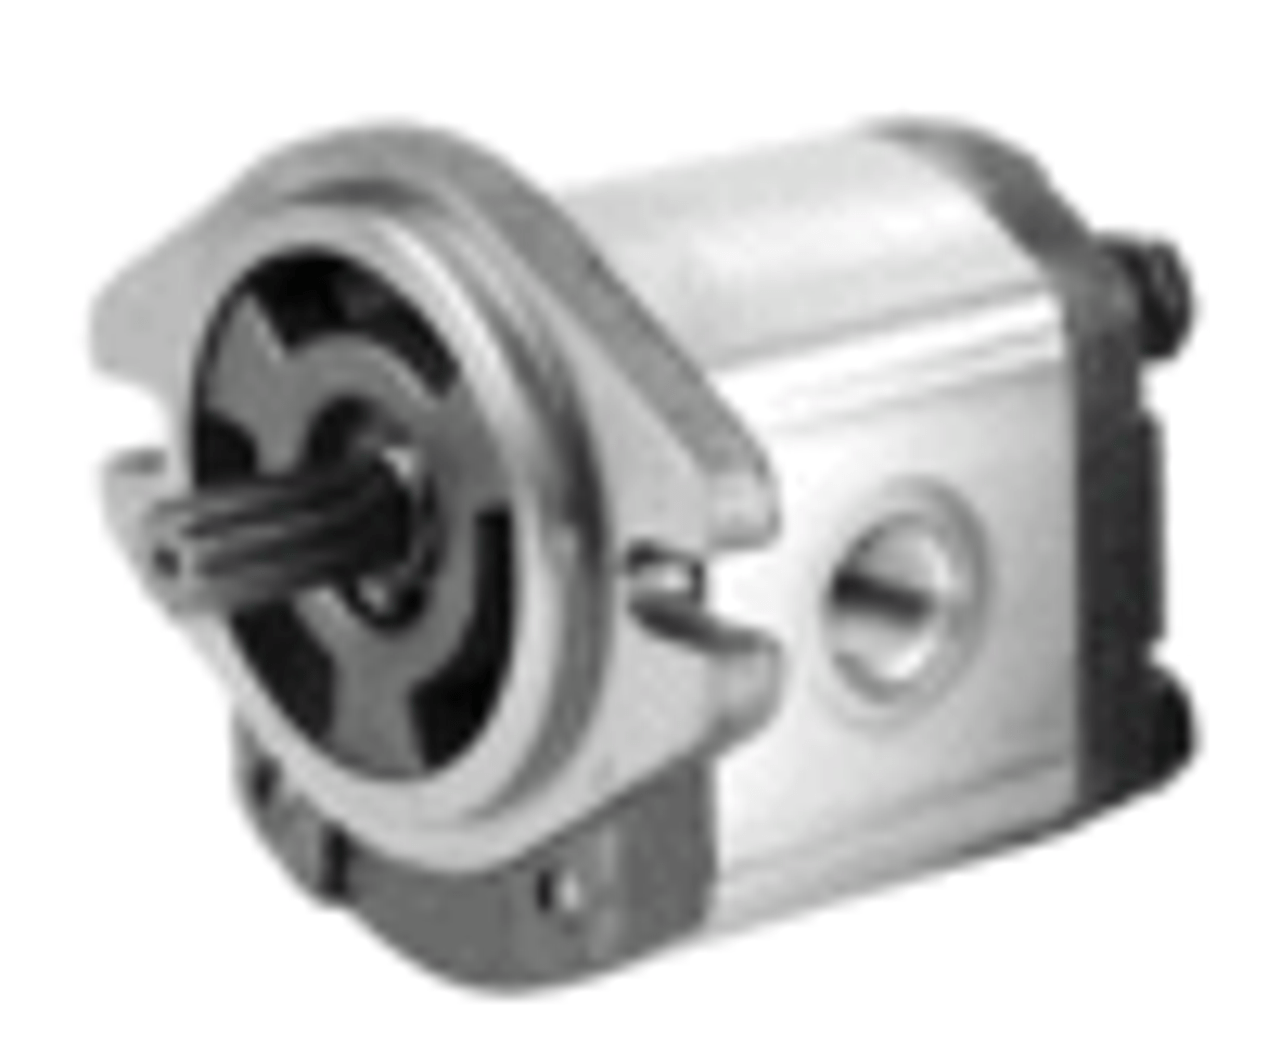 Honor Pumps 2GG2U08L Hydraulic gear pump .52 cubic inch displacement 9T spline shaft